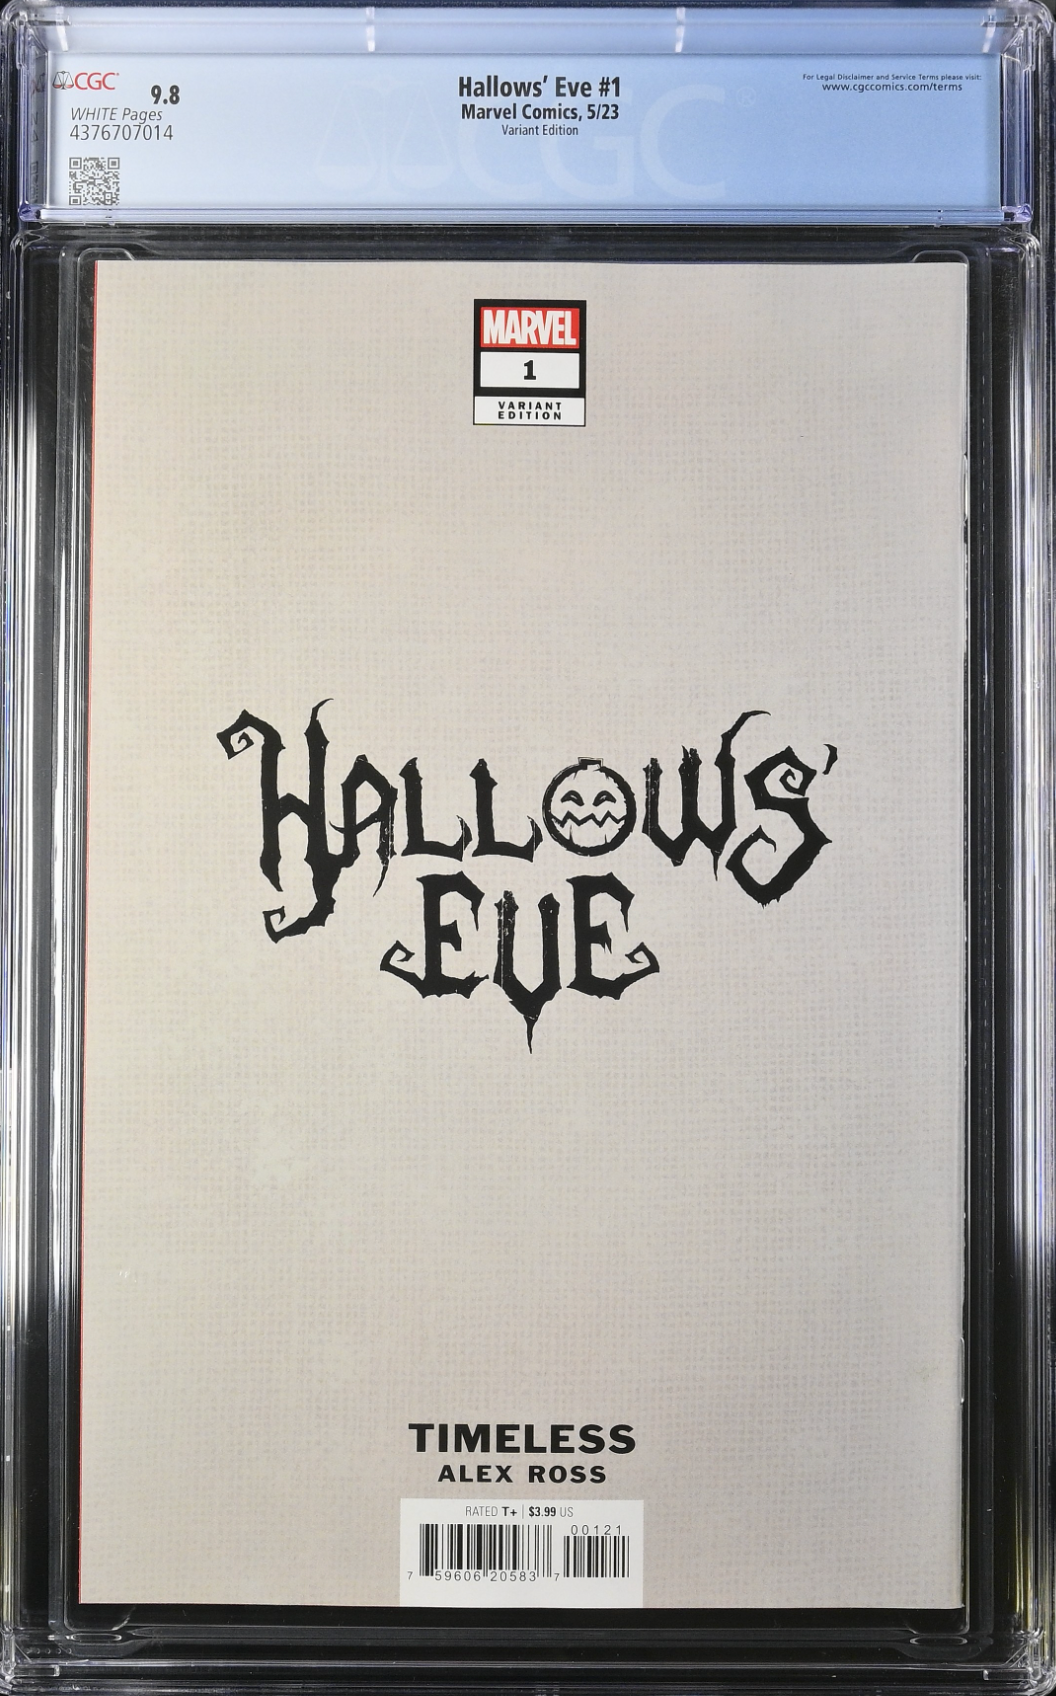 Hallows Eve #1 Alex Ross Green Goblin "Timeless" Variant CGC 9.8